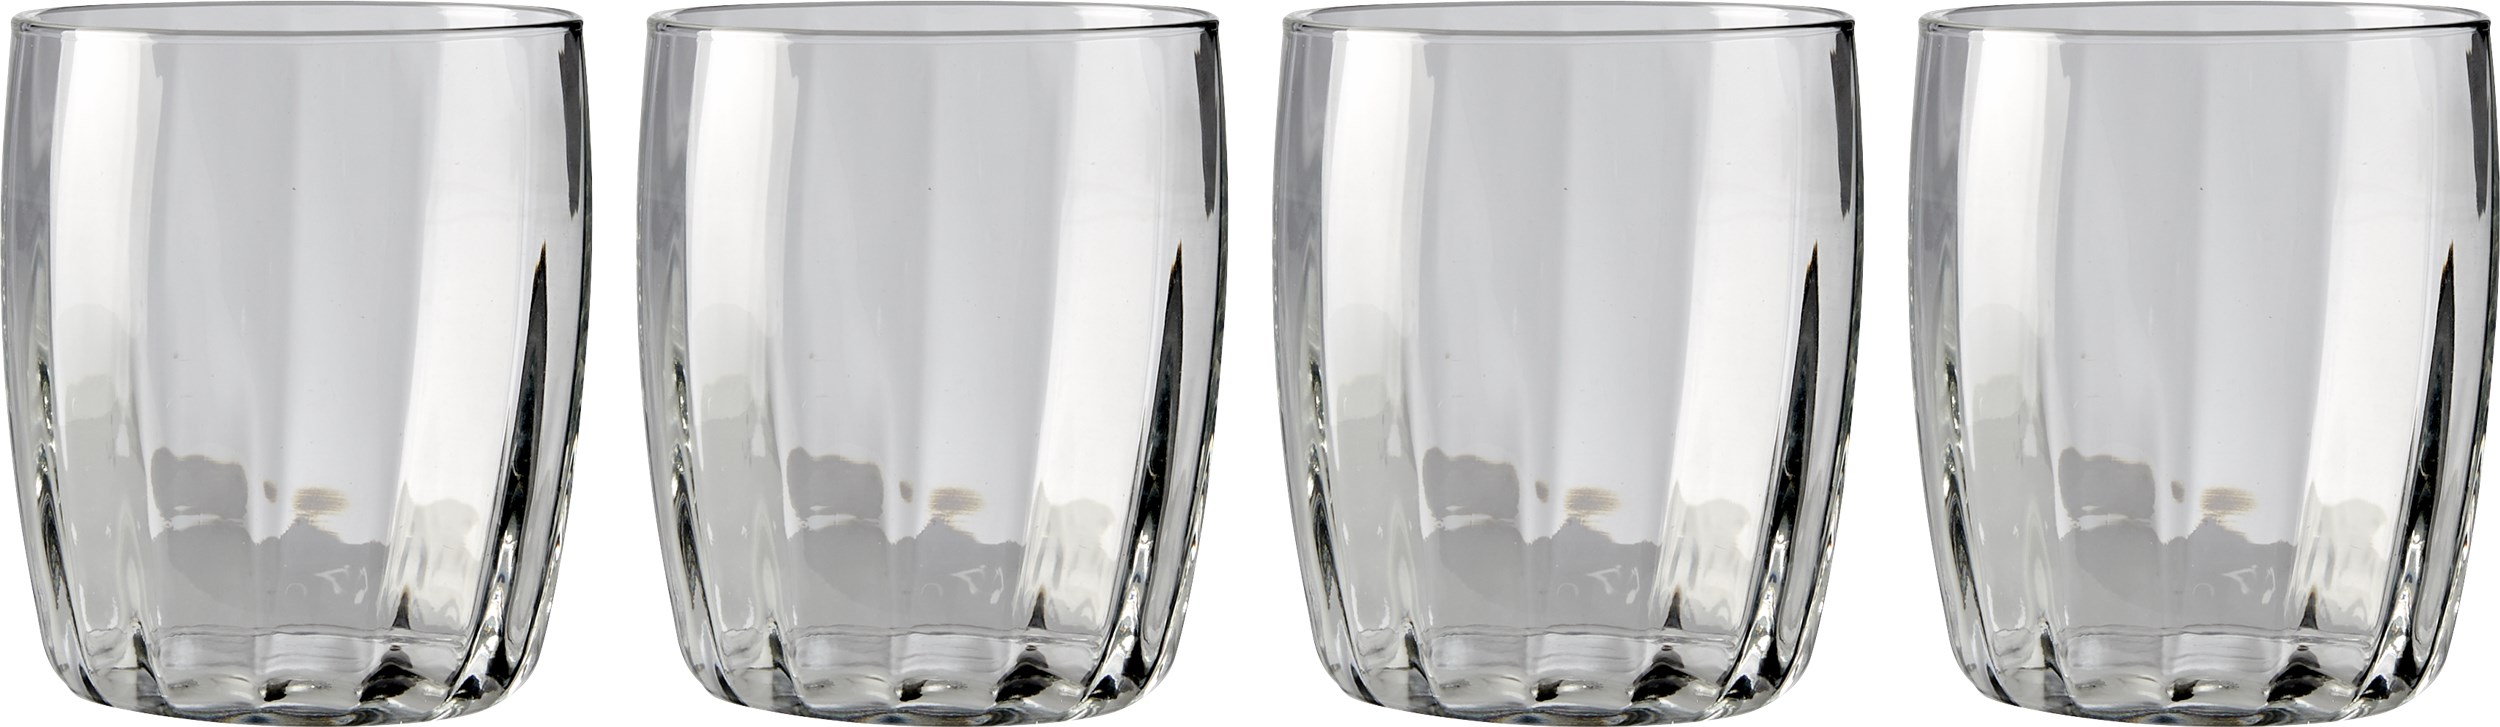 Incontri Vandglas i æske 30 cl - Klar glas